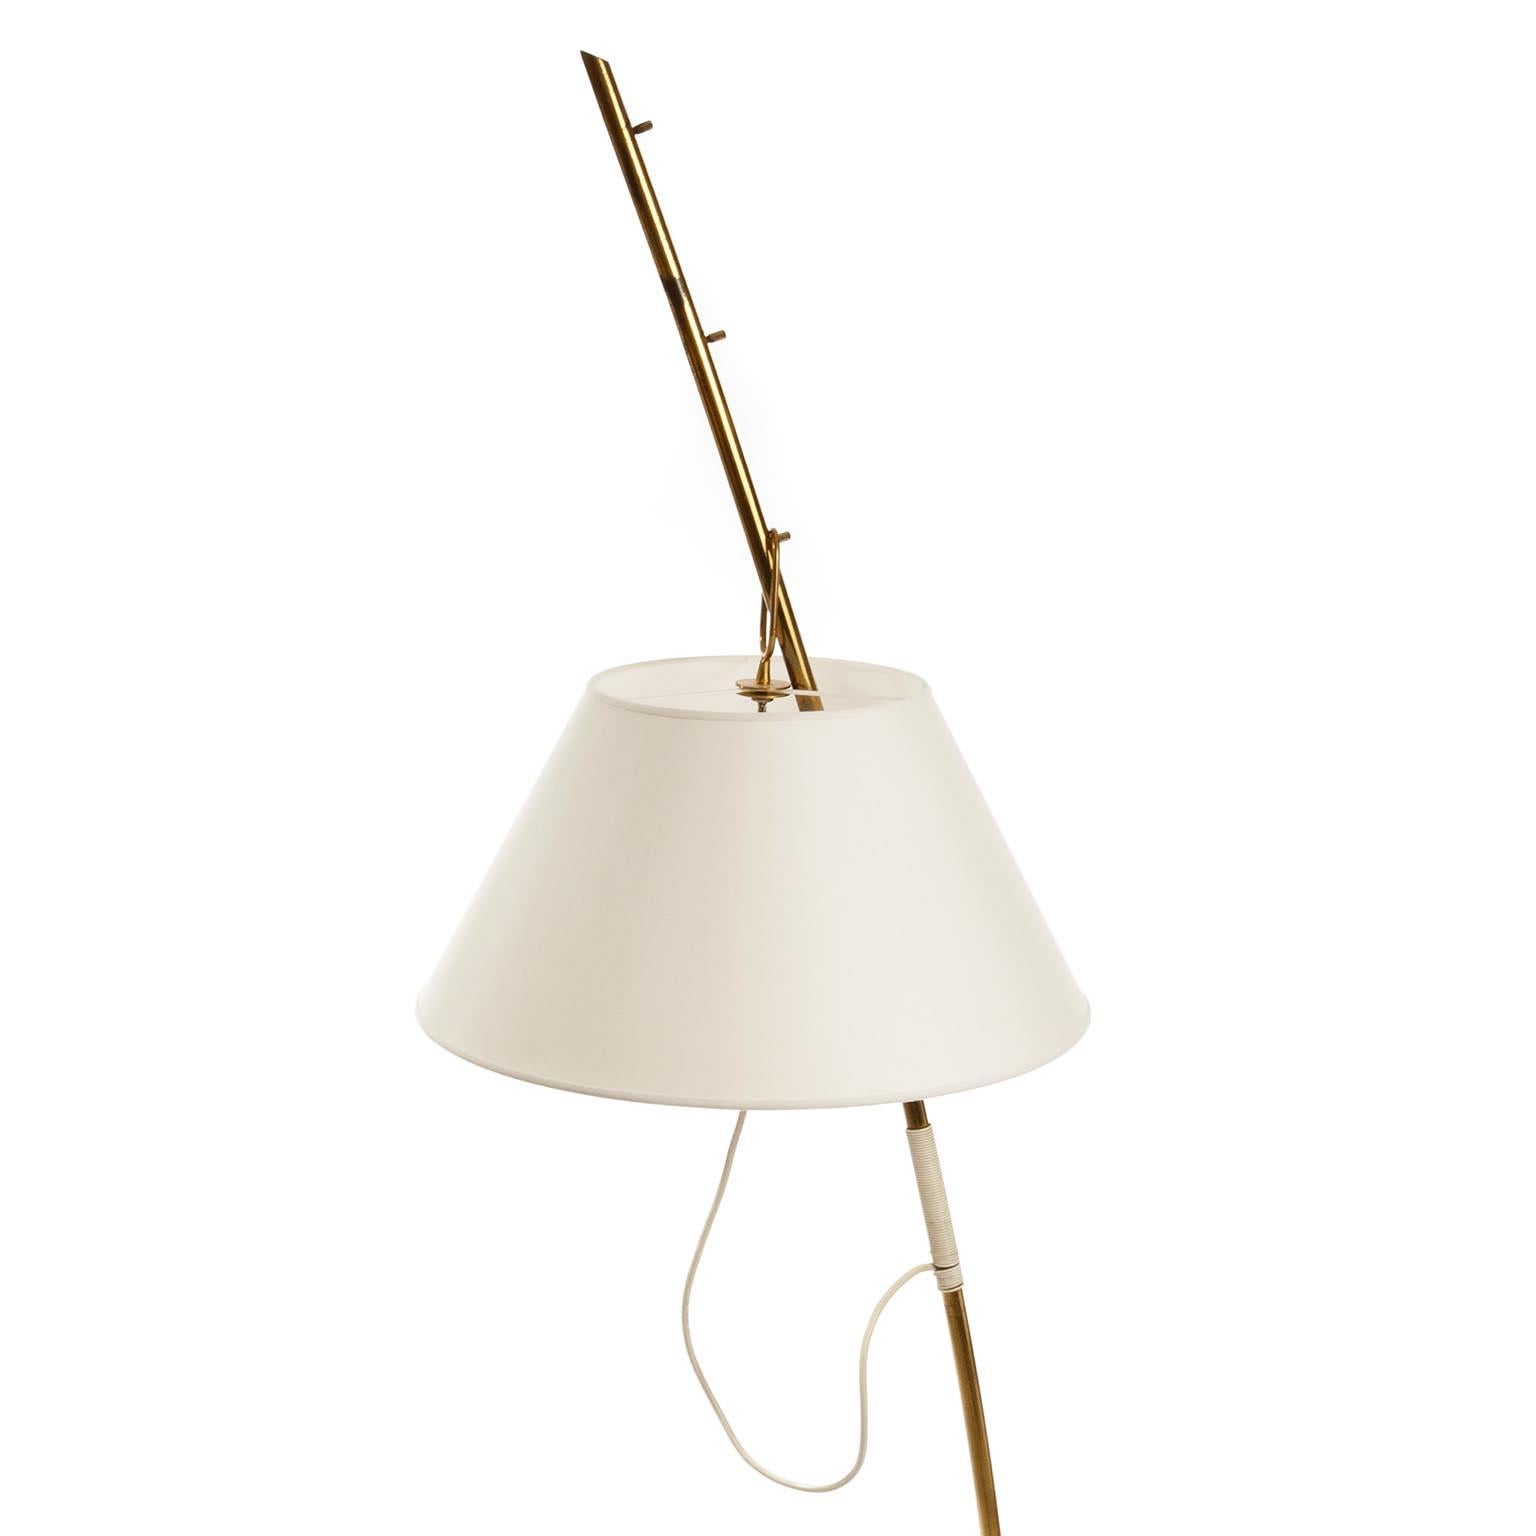 One of Two Height Adjustable Kalmar Brass Floor Lamps 'Cavador' No. 2098, 1960 For Sale 1